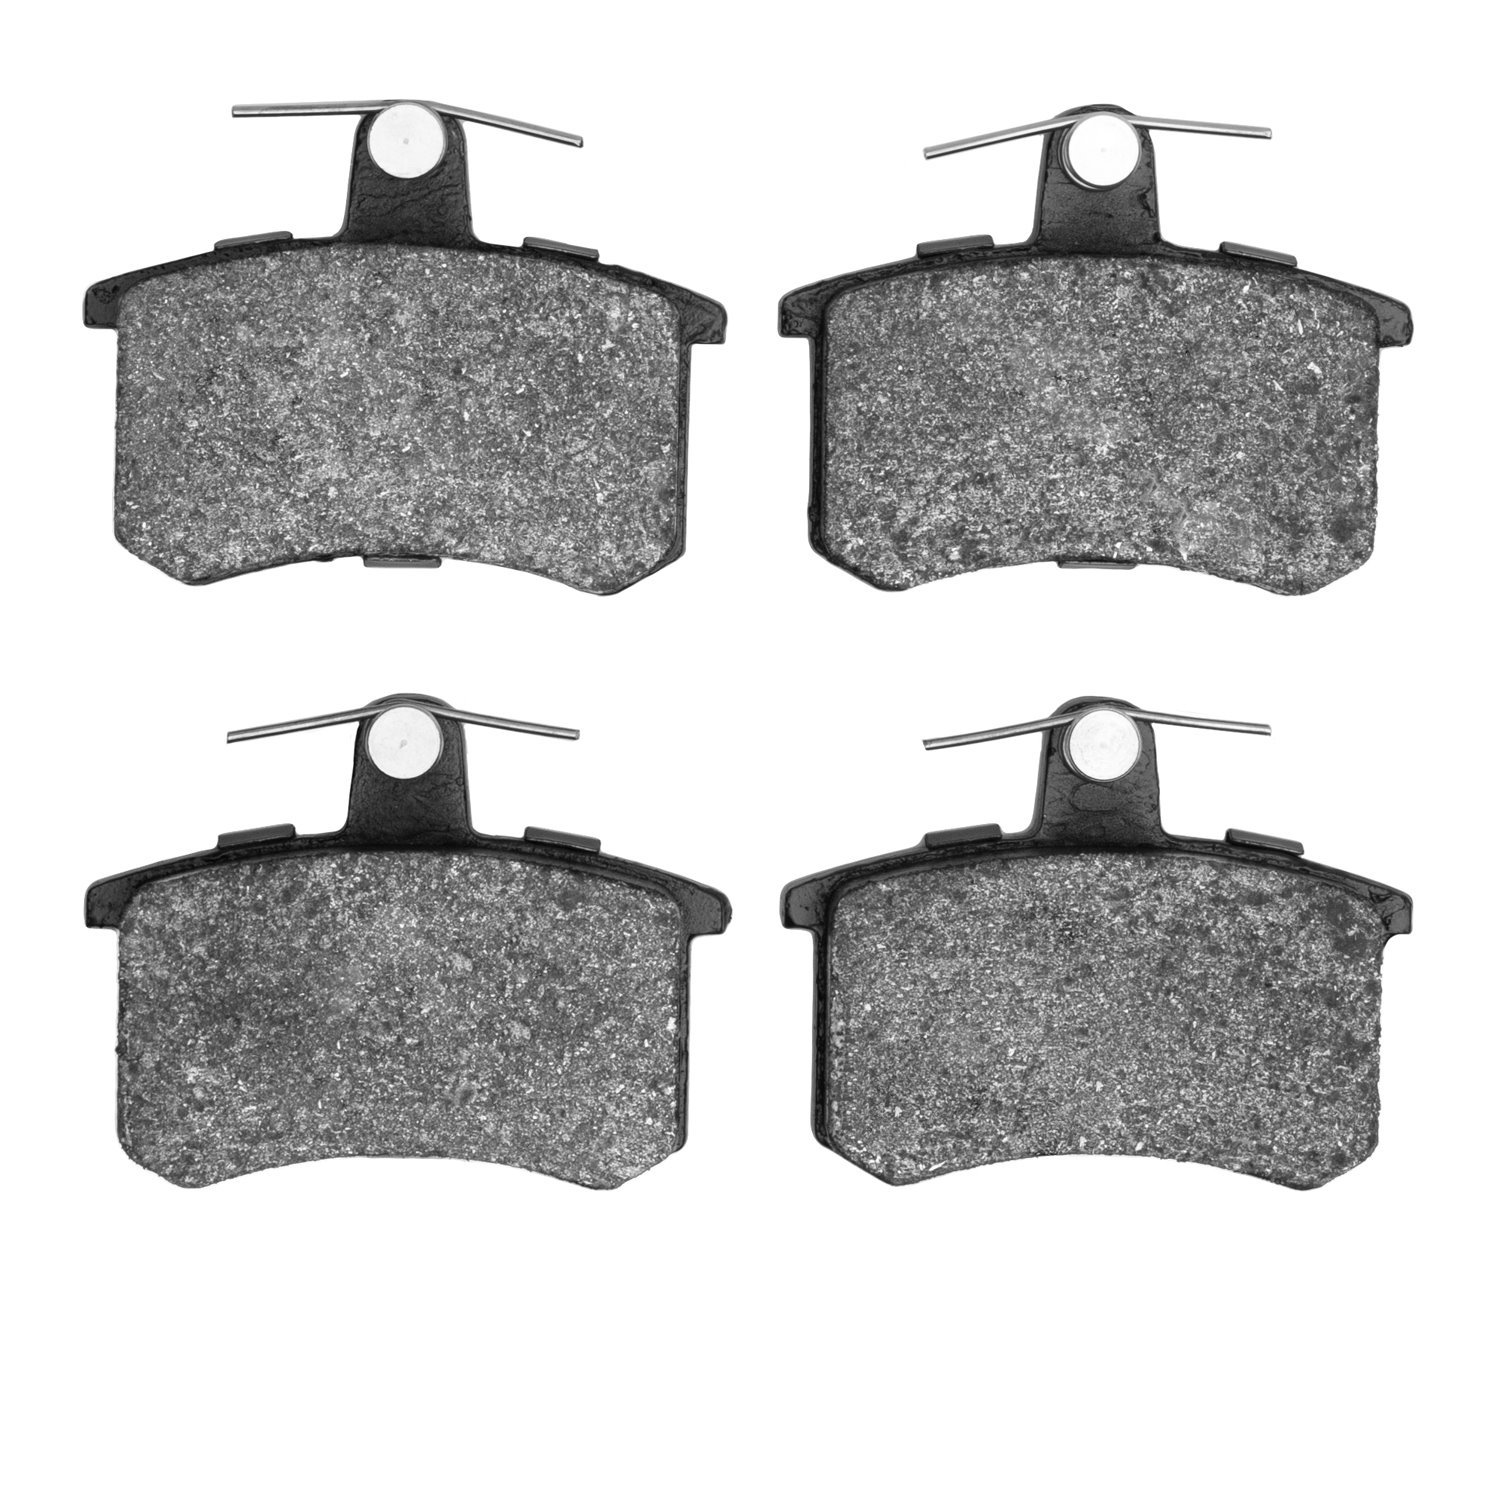 1310-0228-00 3000-Series Ceramic Brake Pads, 1980-2001 Multiple Makes/Models, Position: Rear